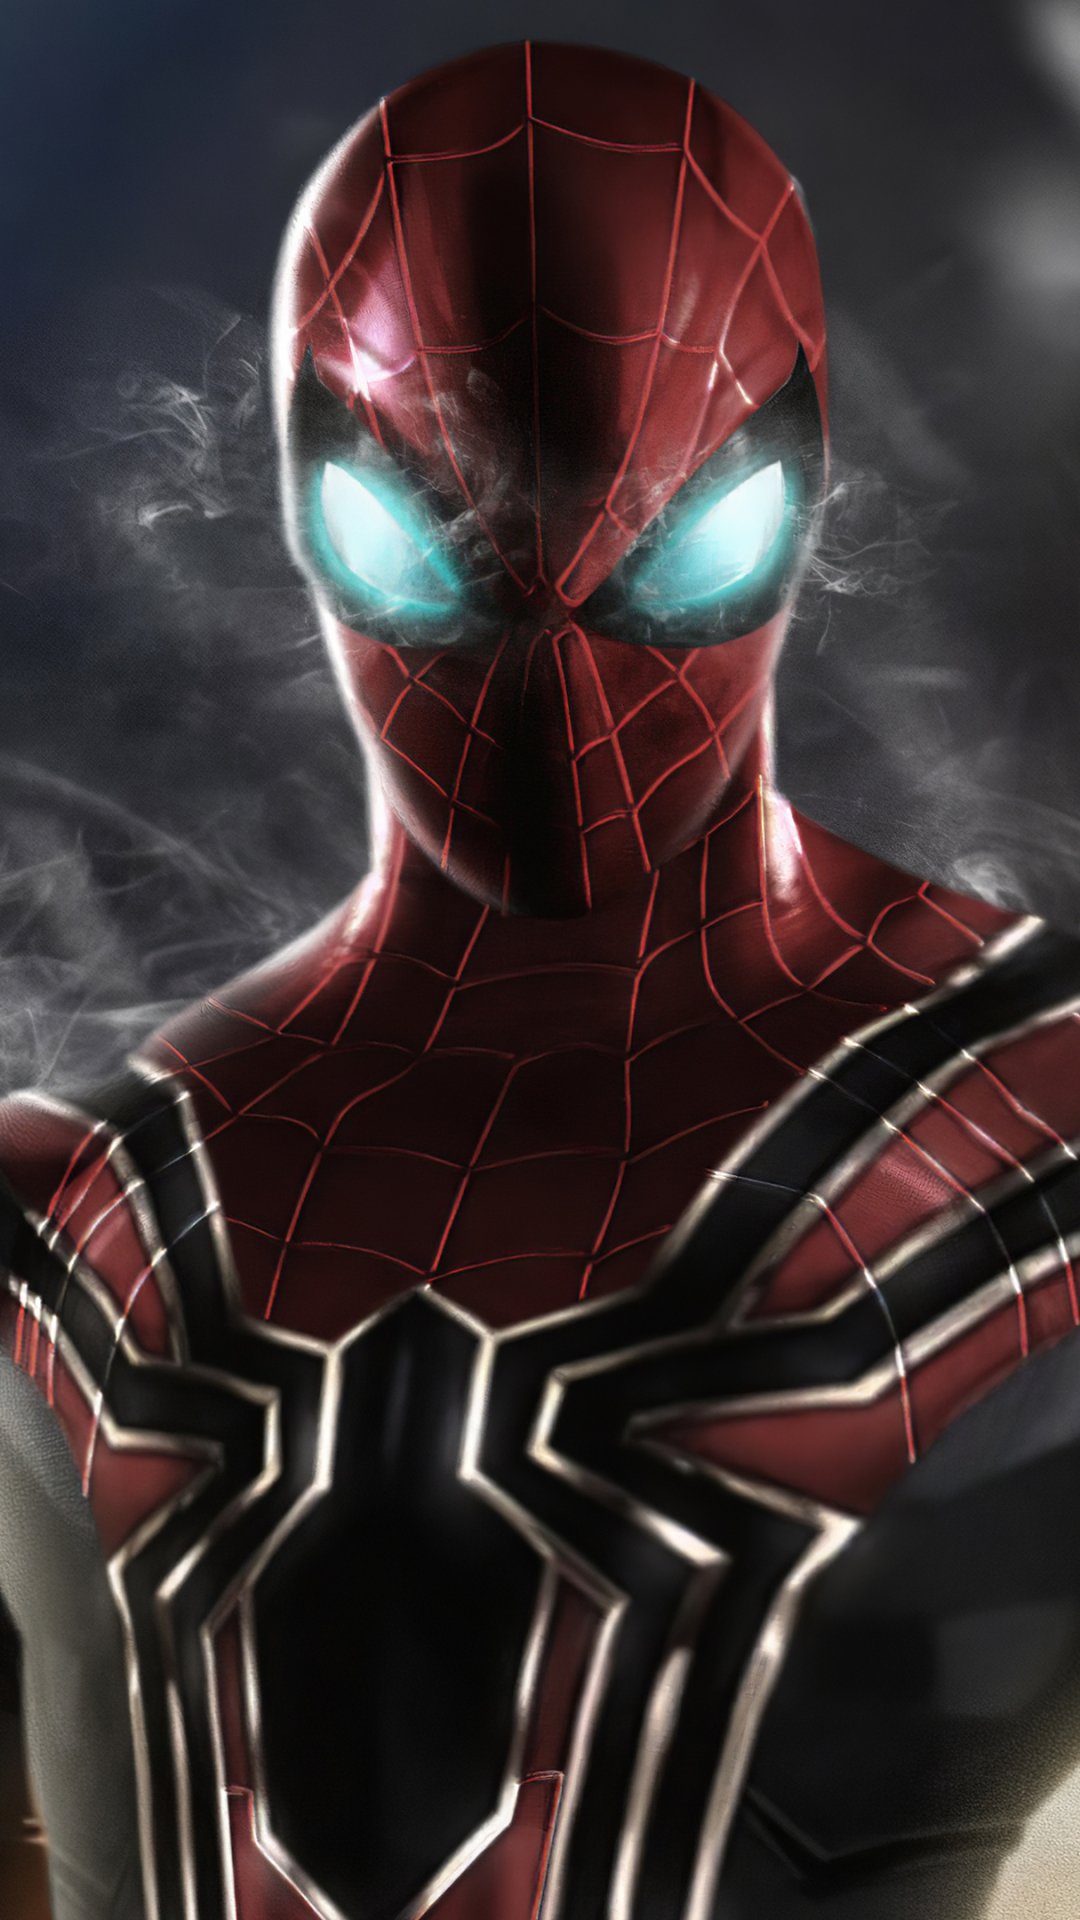 Spider-Man Phone Wallpaper by Yadvender Singh Rana